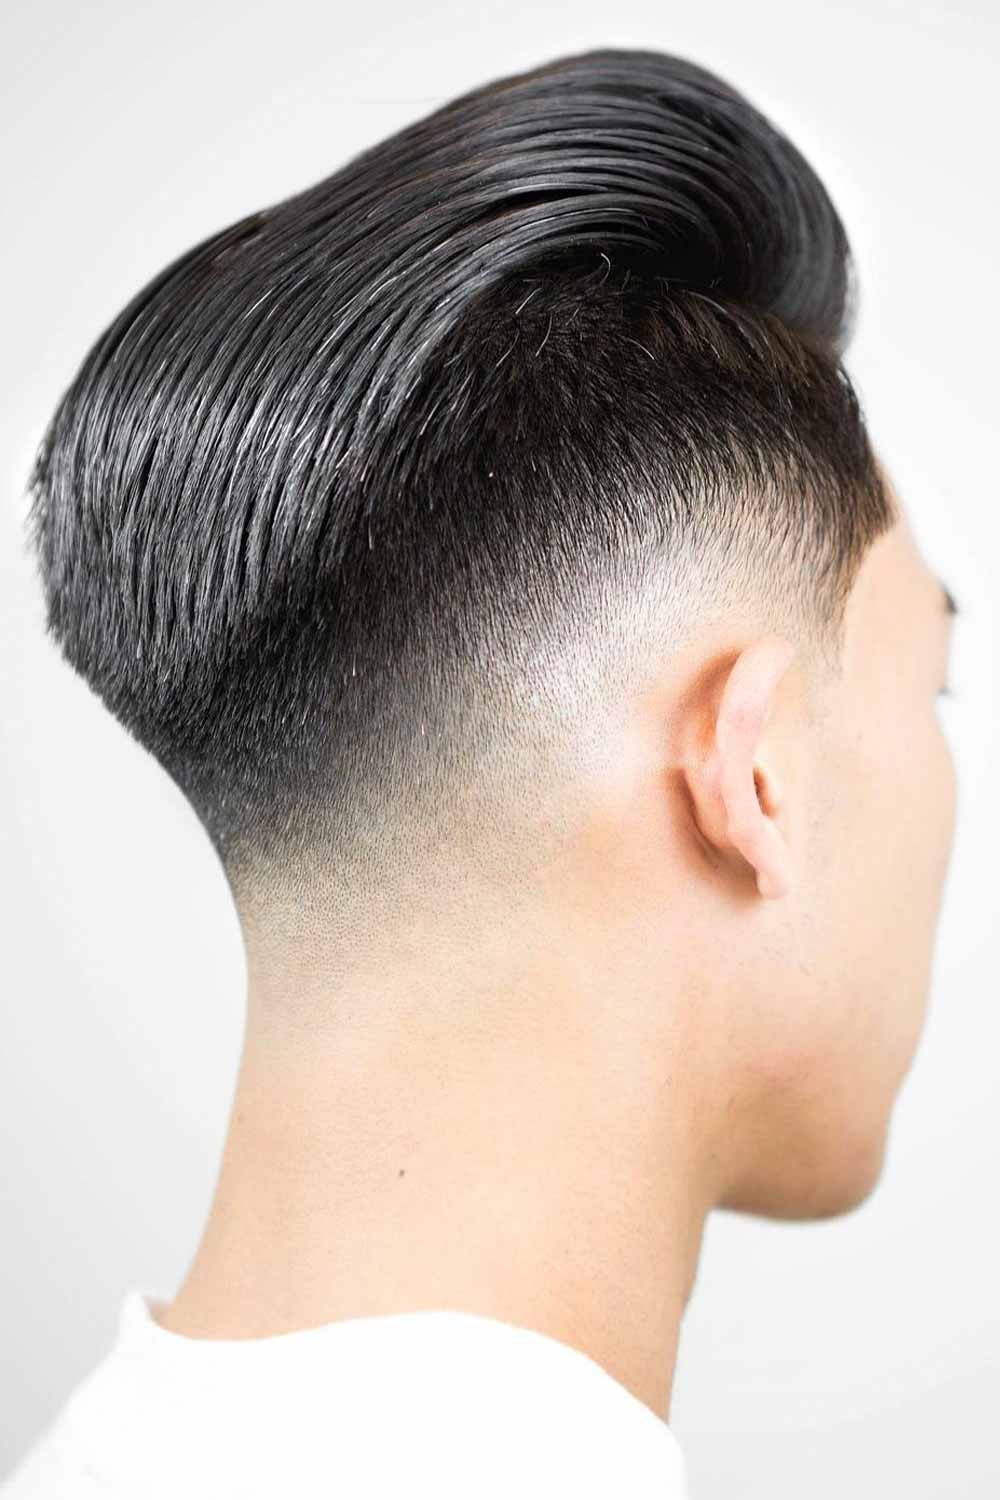 Slick Back Mens Comb Over Haircut #comboverfade #combover #fade